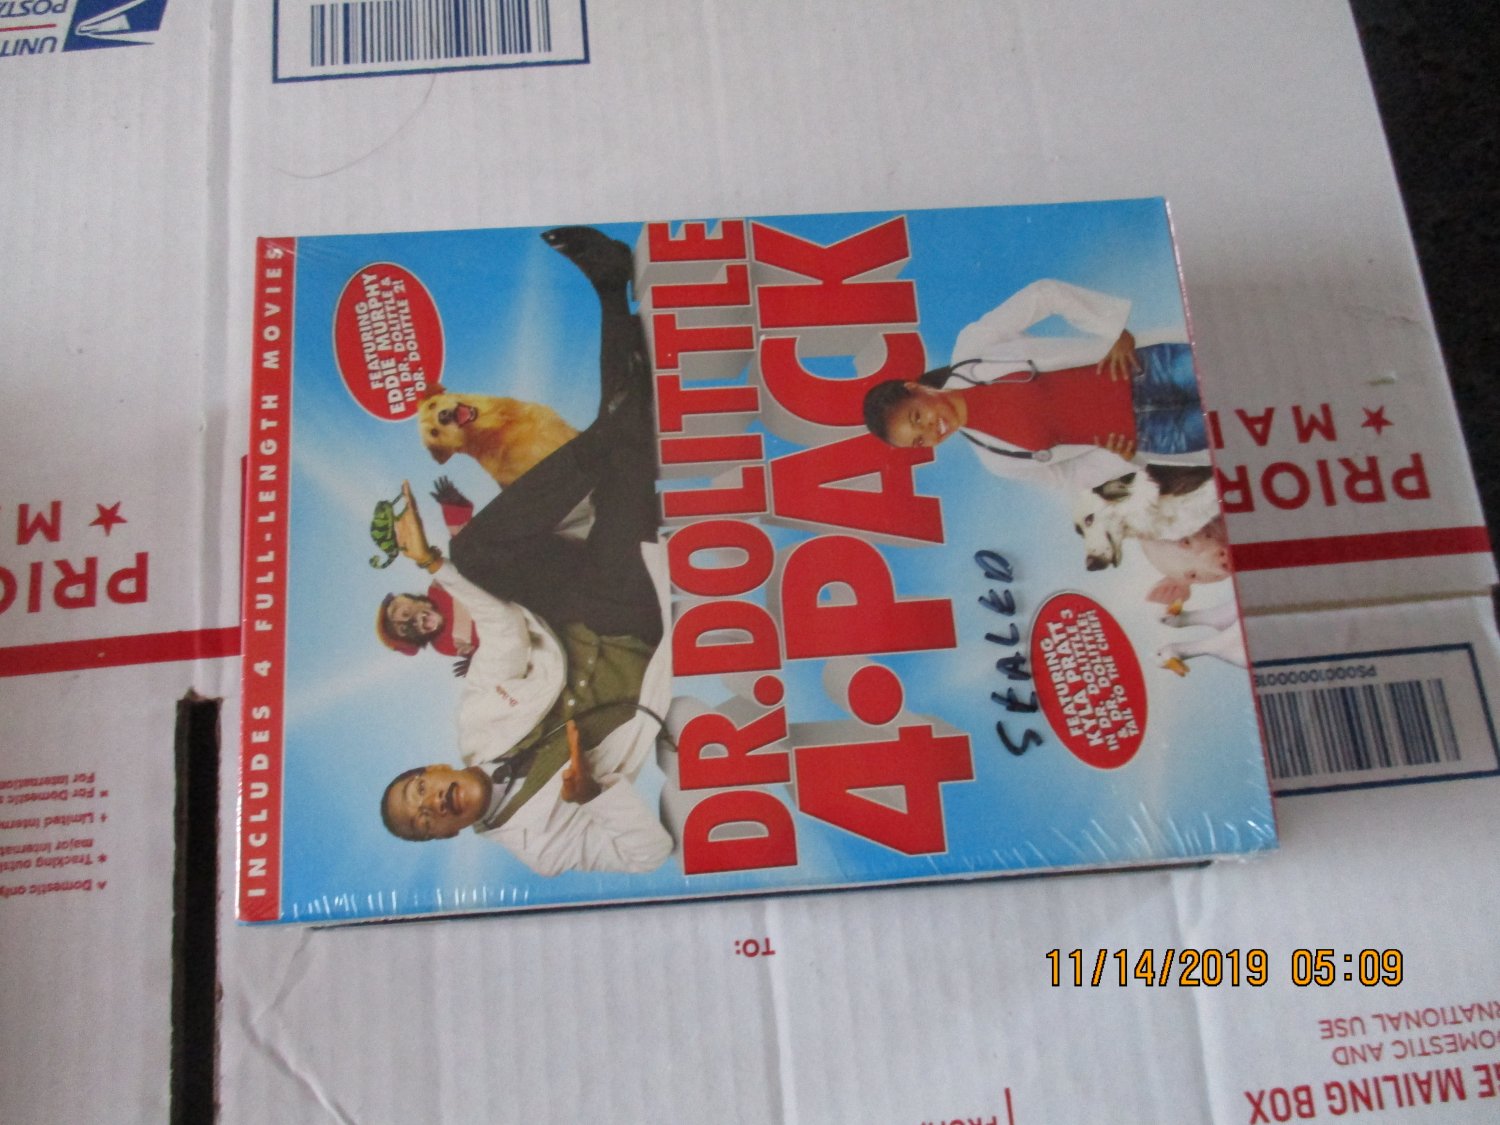 Dr Dolittle 4 Pack Dvd Eddie Murphy Factory Sealed